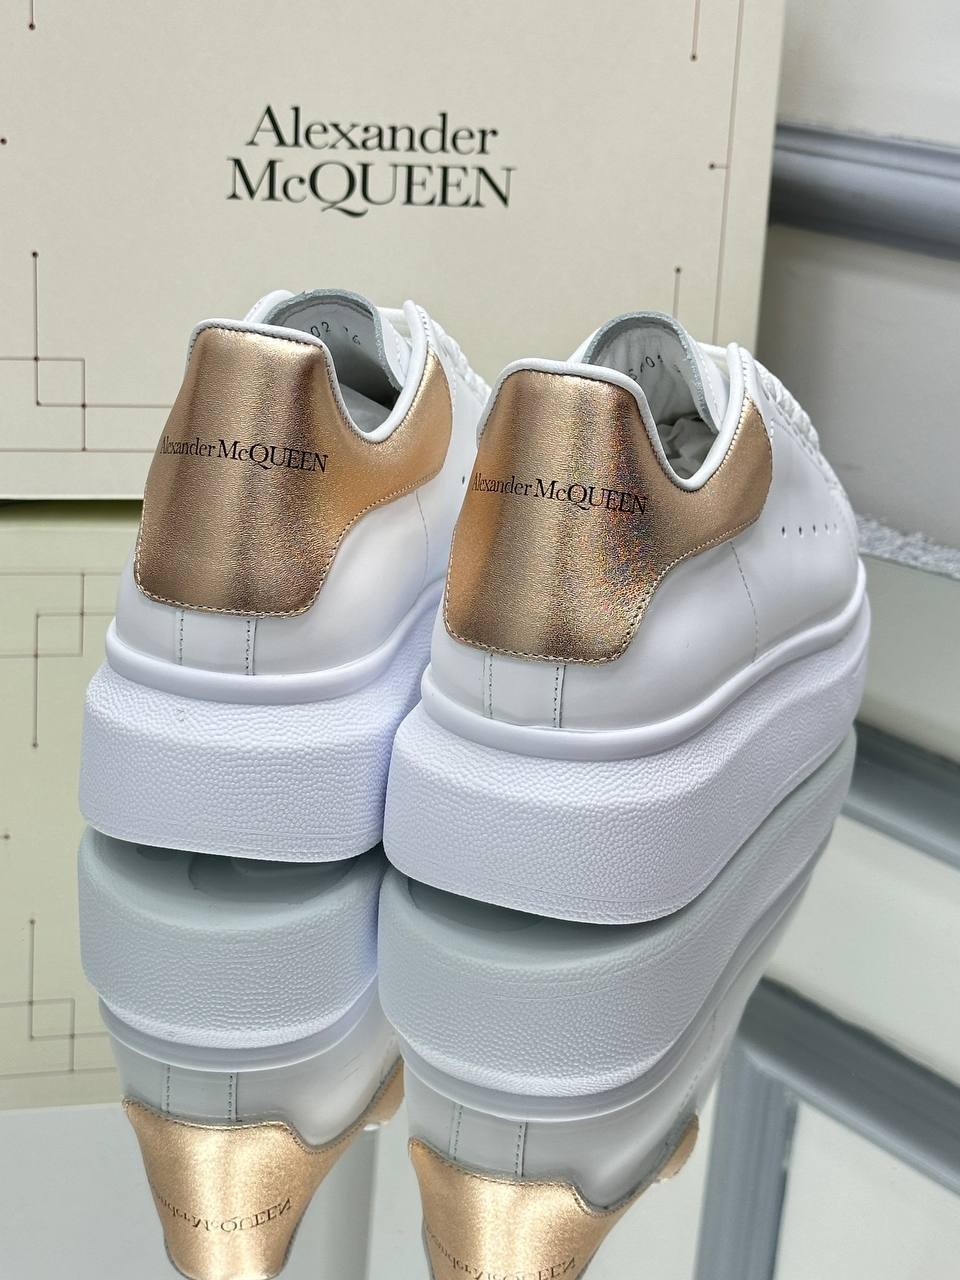 Alexander McQueen Sneakers oversize Women 553770WHFBU9075 Leather White Gold  425€